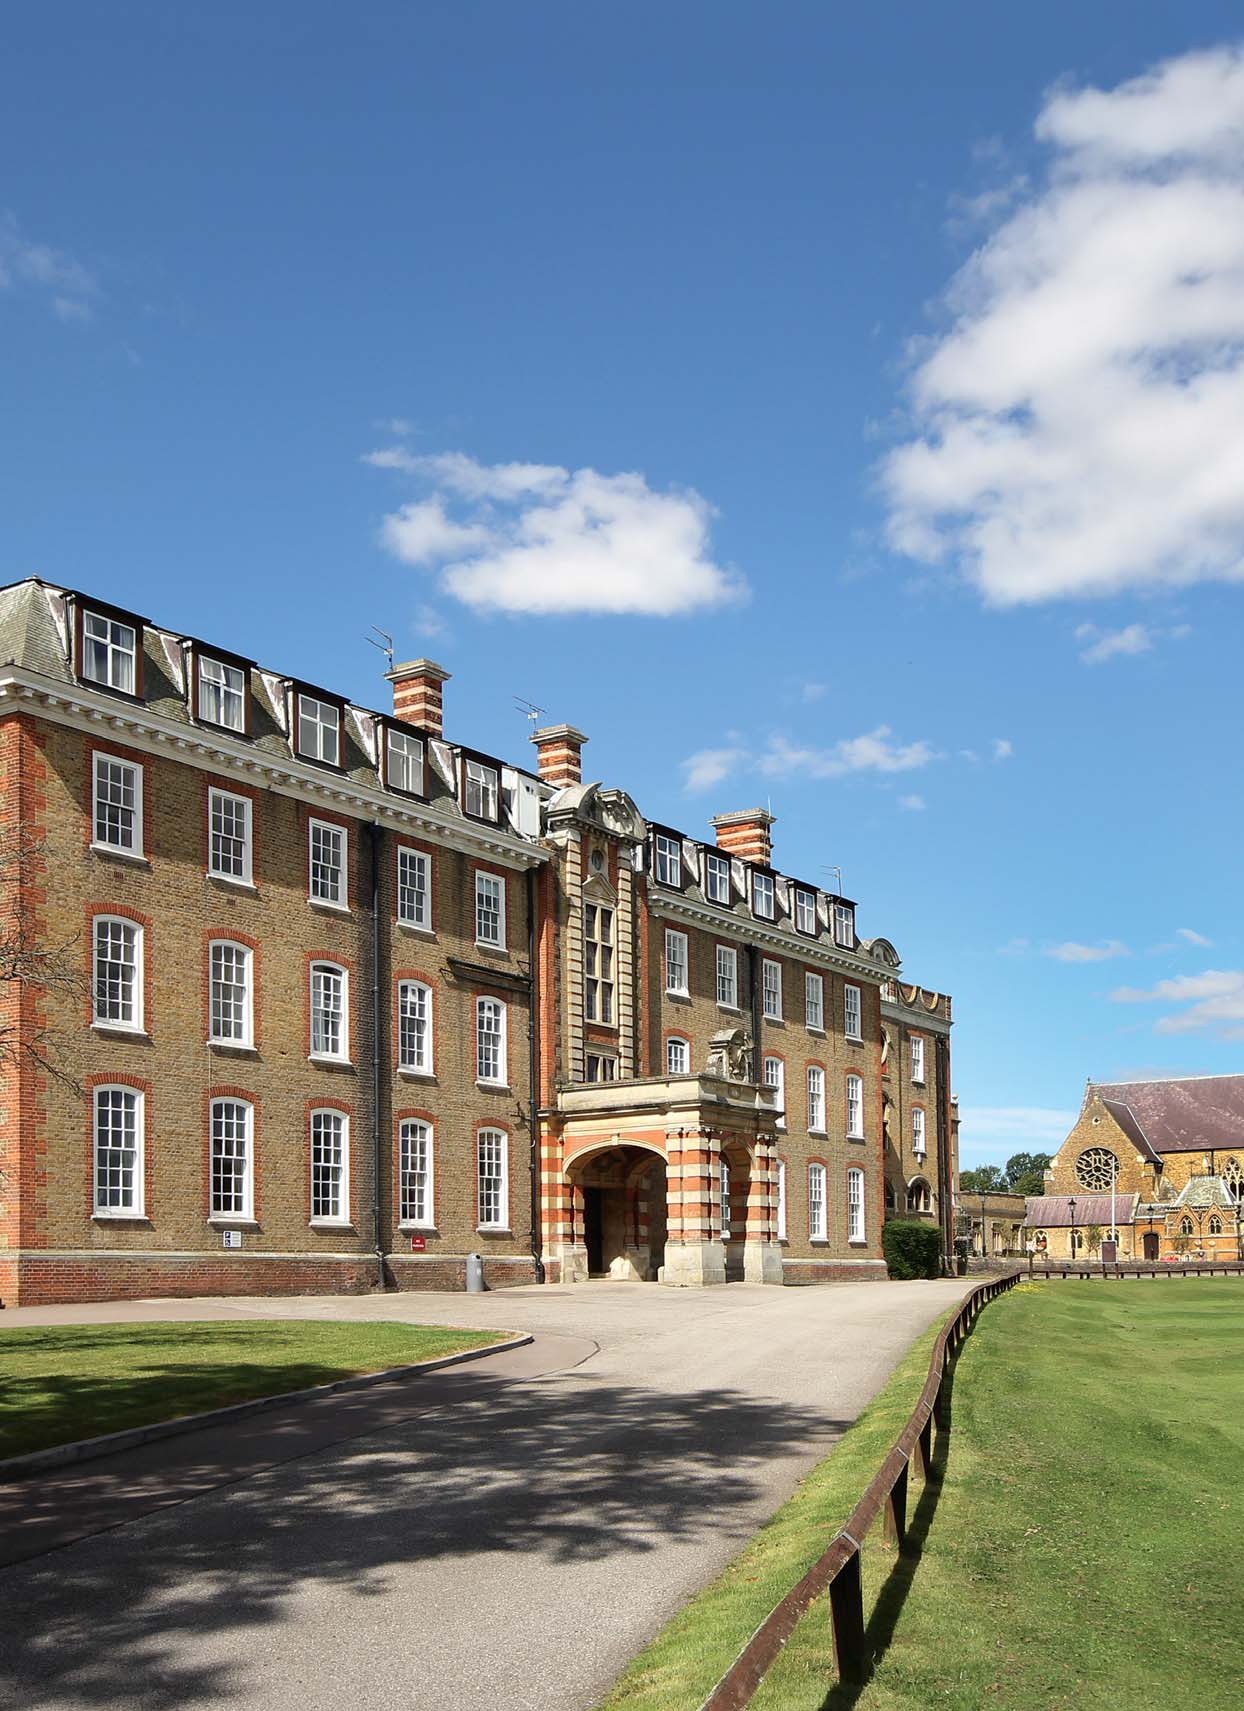 St Edmund's College, İngiltere'nin en eski